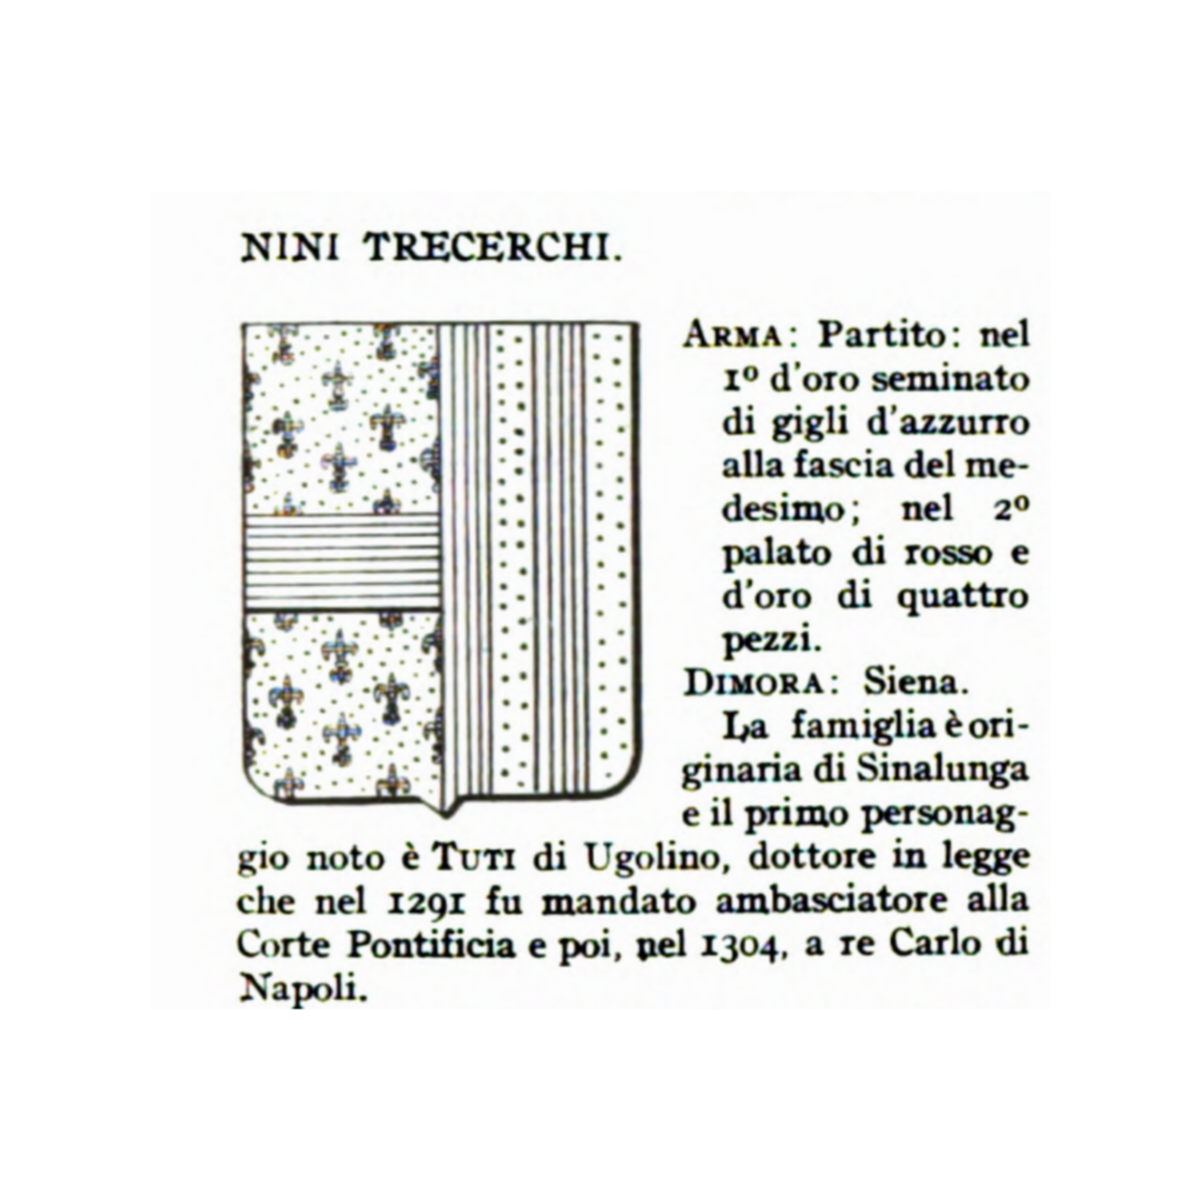 Coat of arms of familyNini Trecerchi